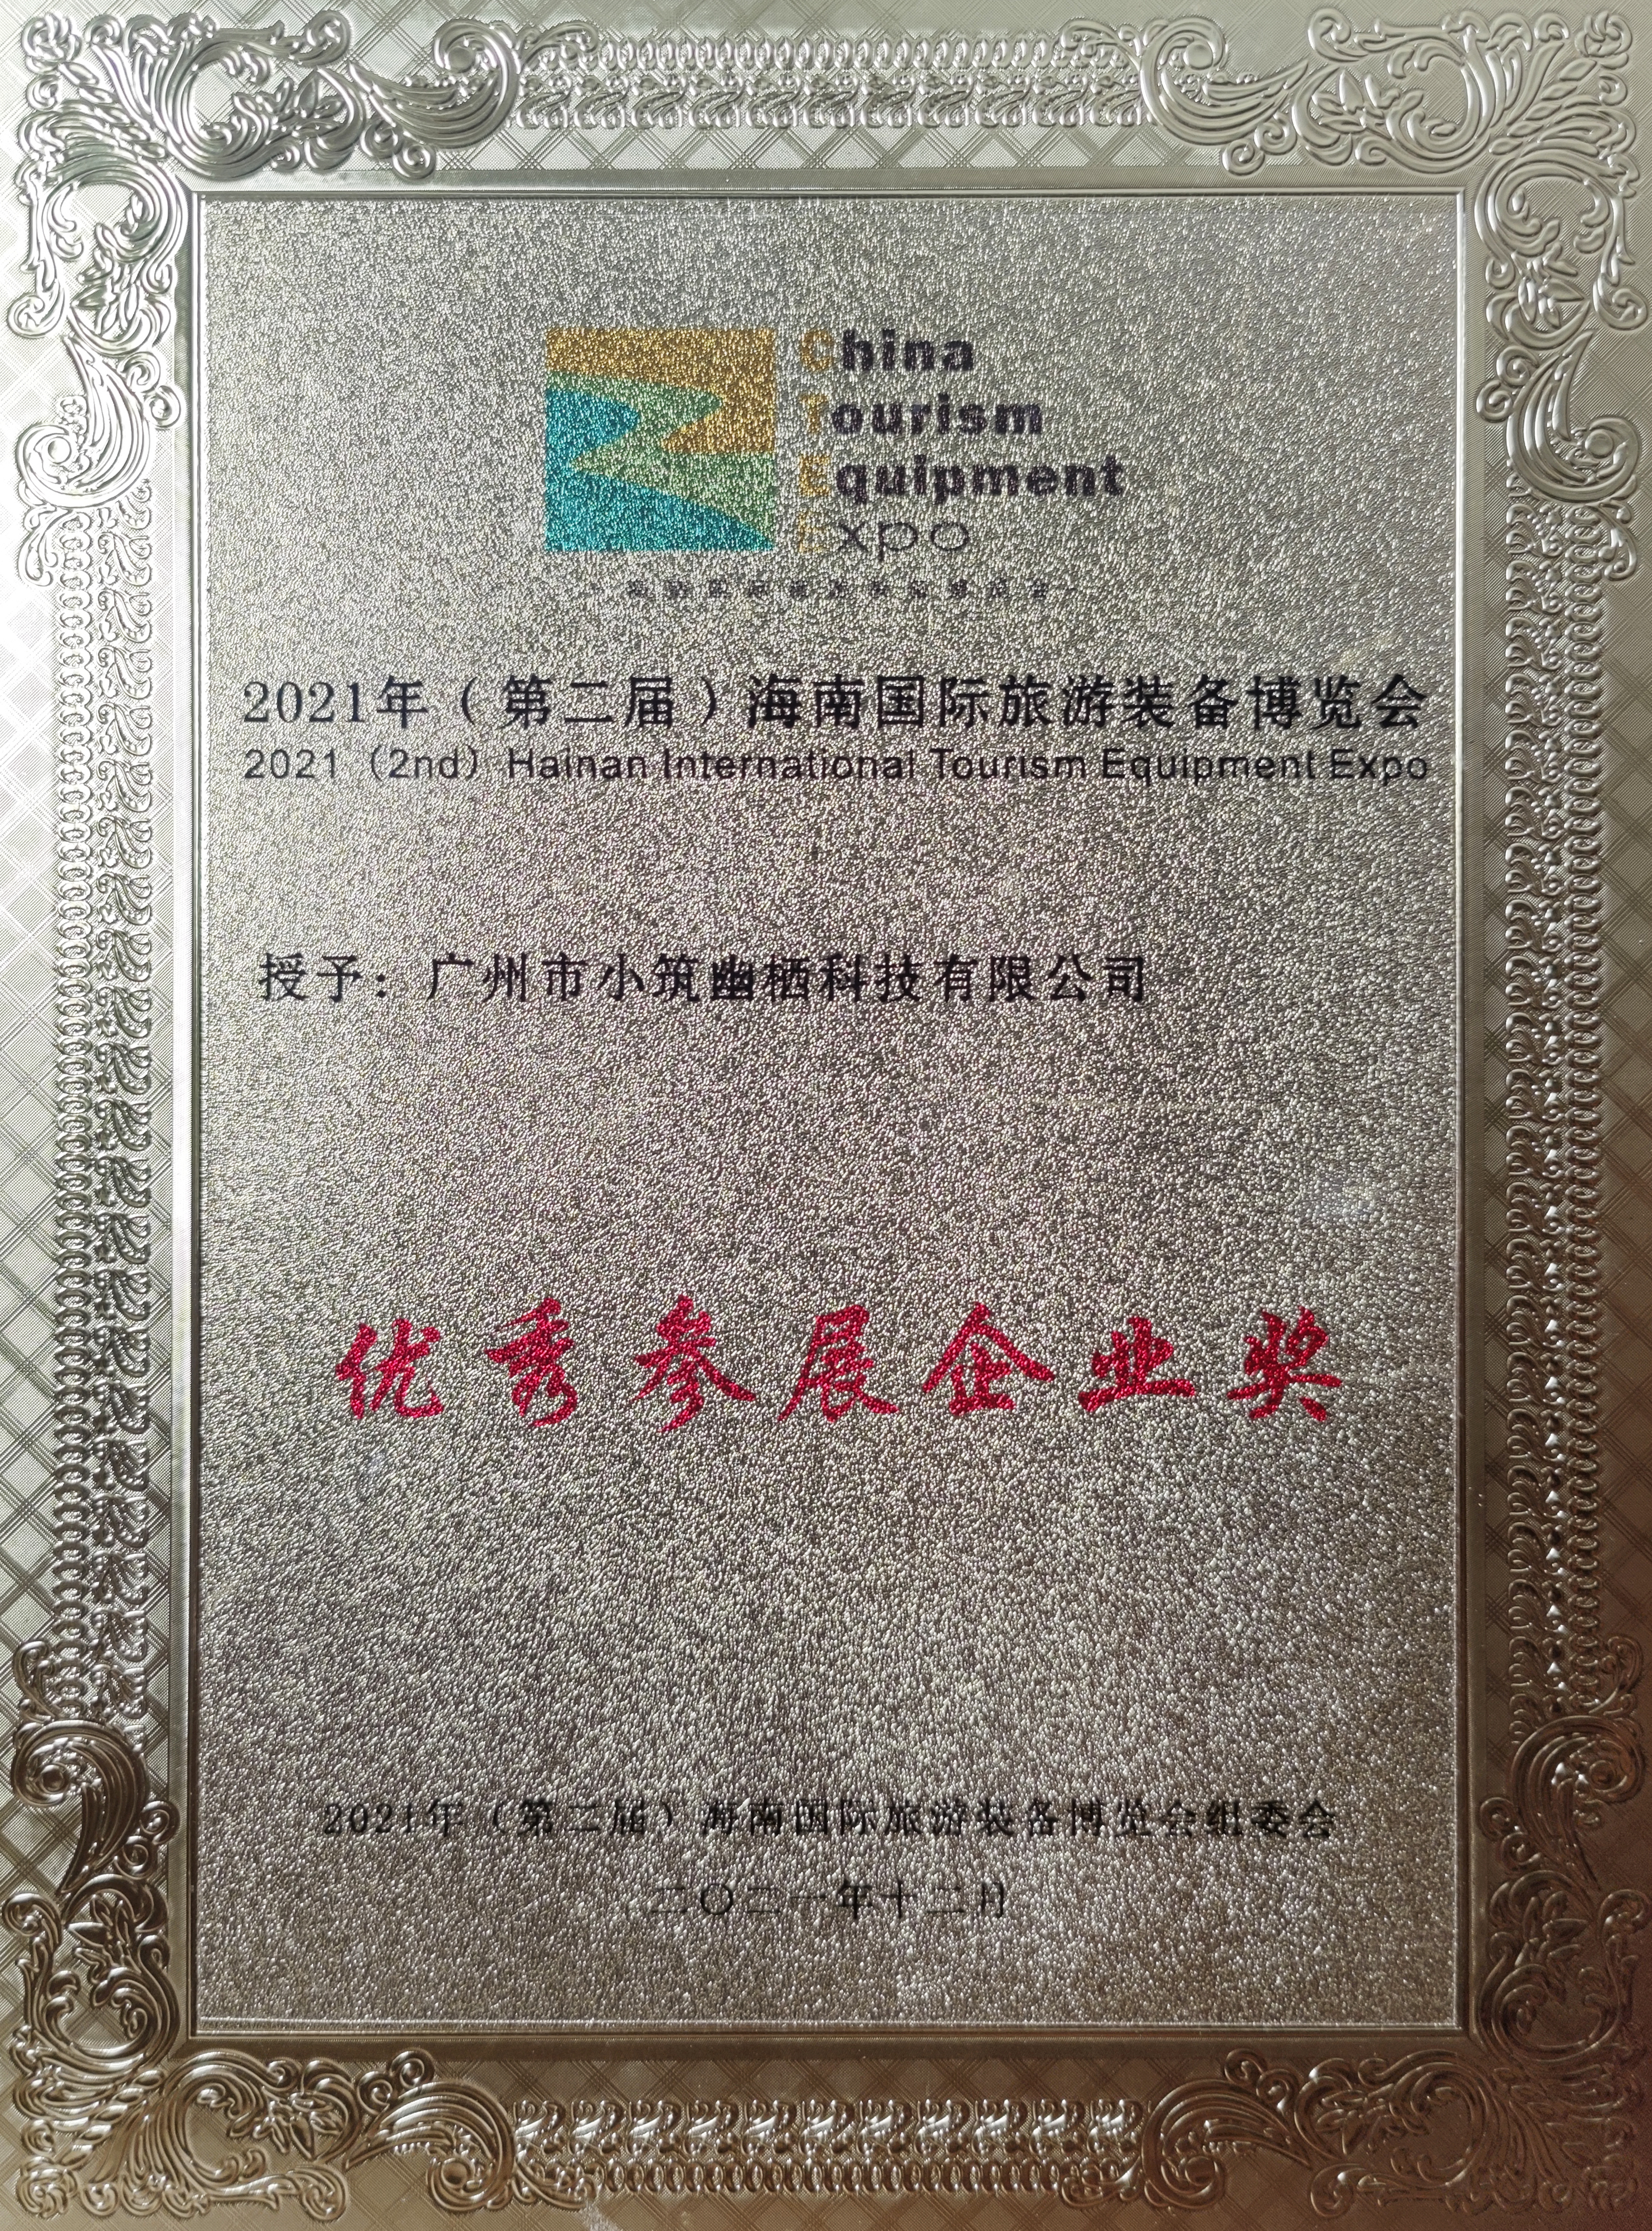 certificat d'honor (1)